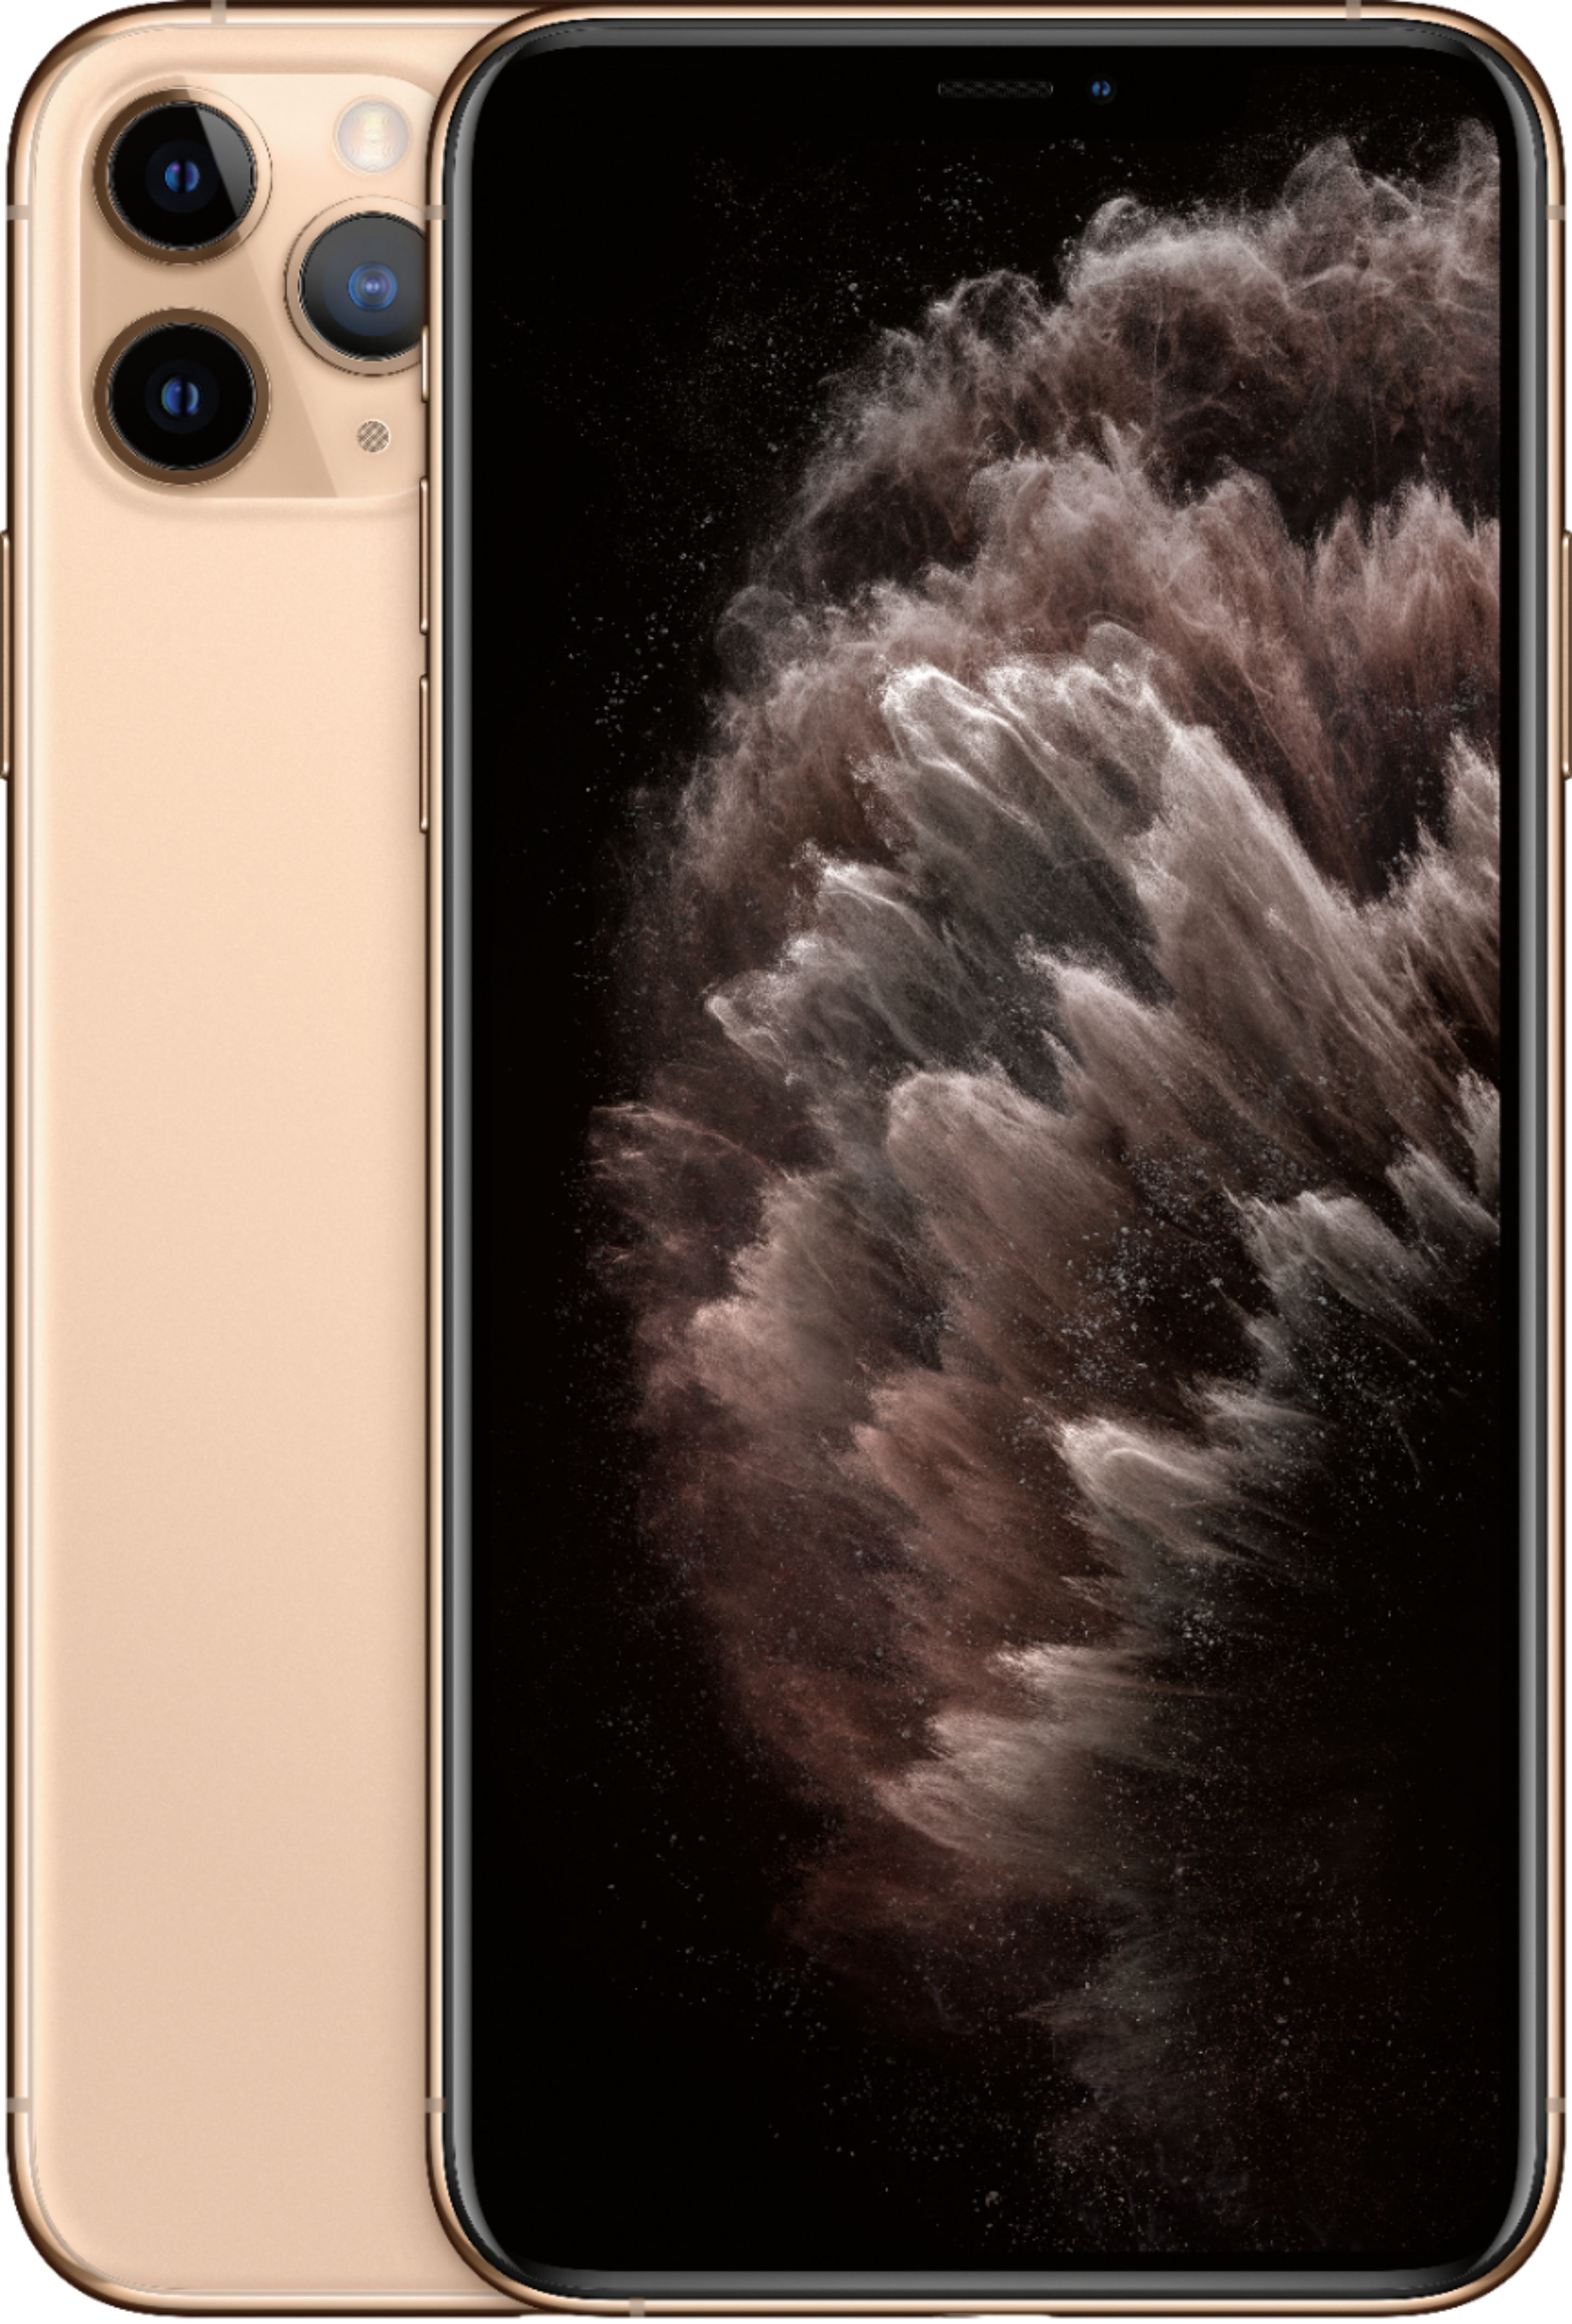 Apple Iphone 11 Pro Max 256gb Gold Unlocked Mwgm2ll A Best Buy